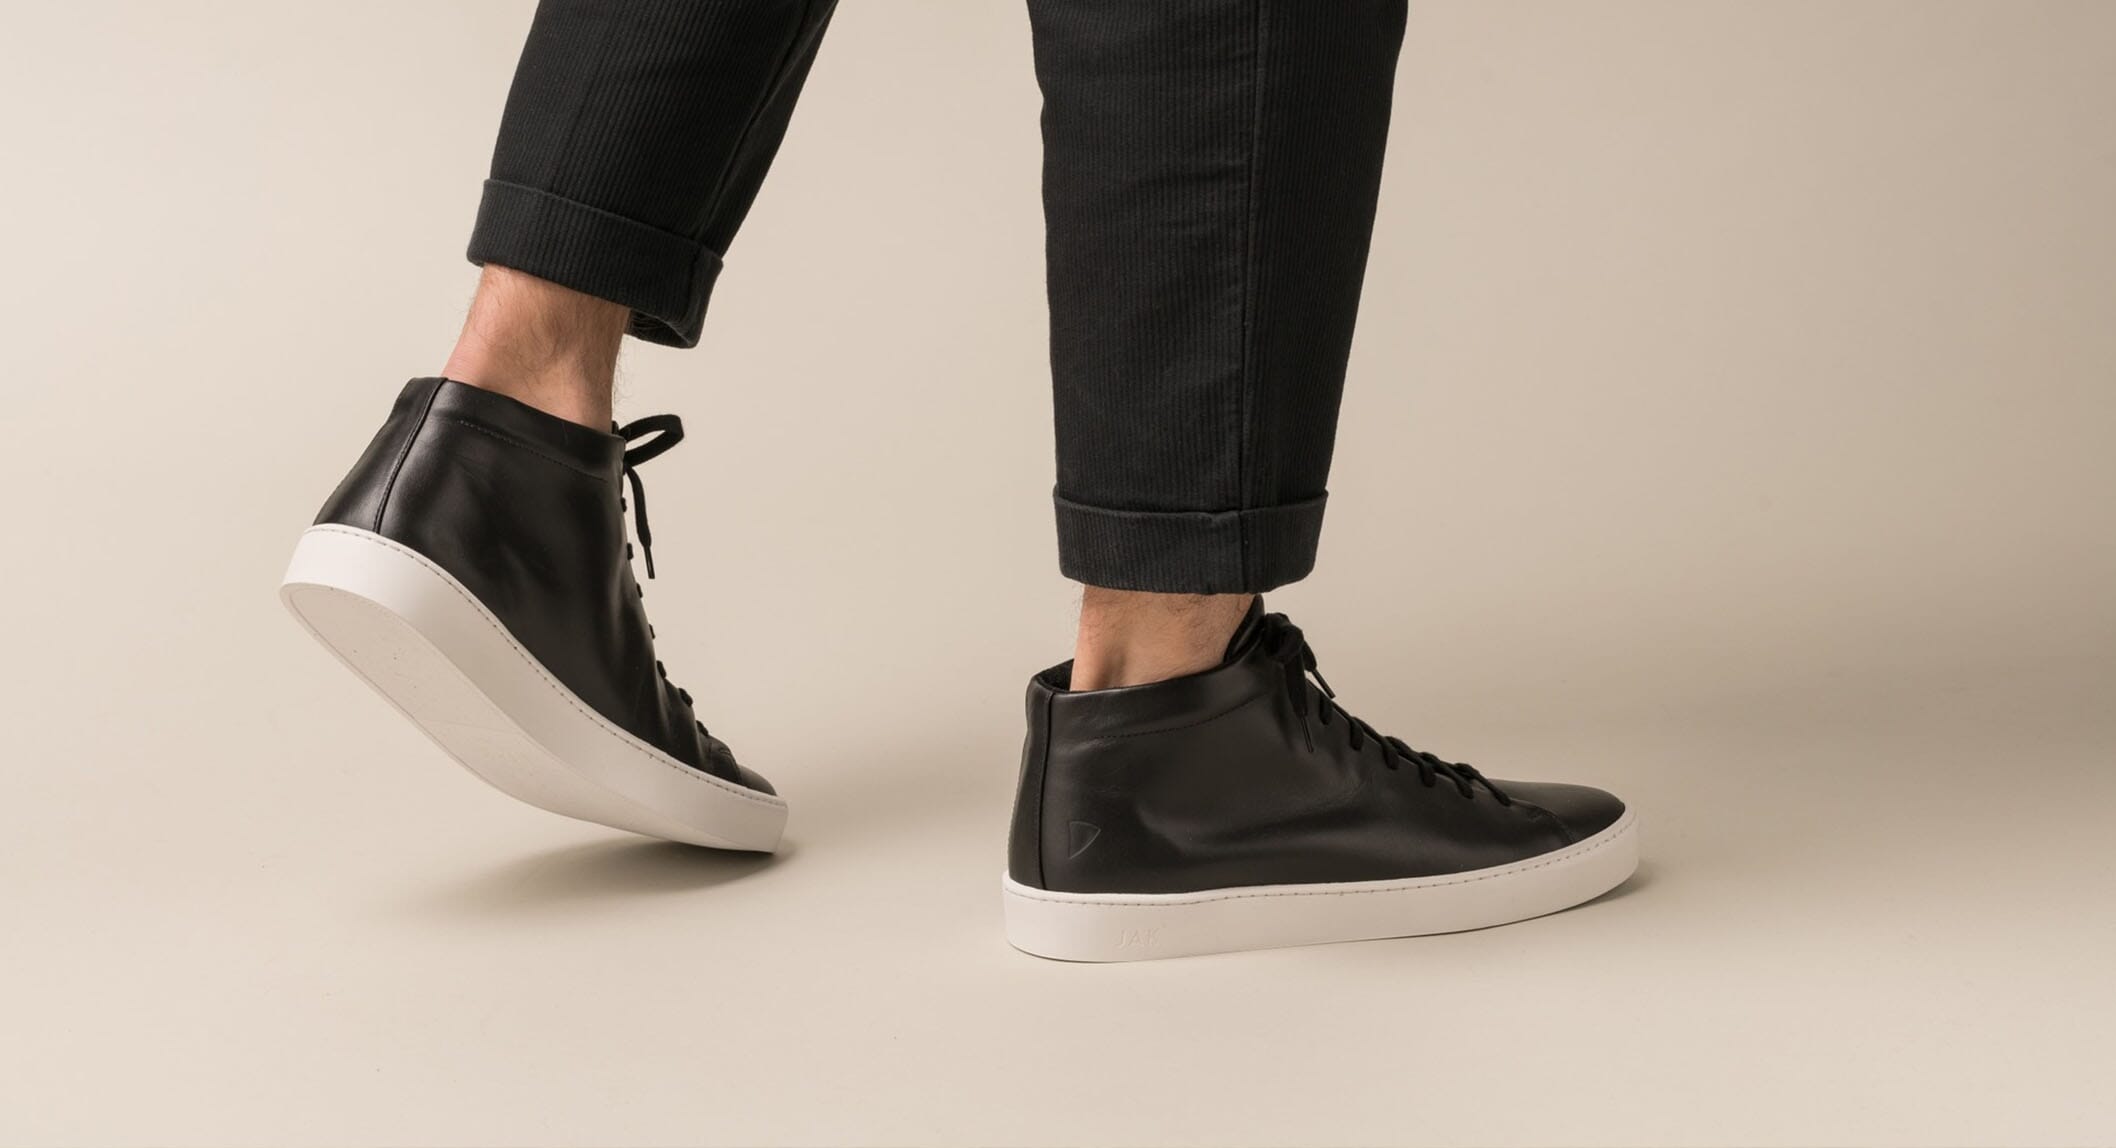 Stylish Mens Black And White Sneaker Sneakers For Men (black, White) at Rs  349 | Mens Shoes, Gents juta, पुरुषों के जूते, जेंट्स शू - Zaptoe, New  Delhi | ID: 25922303655